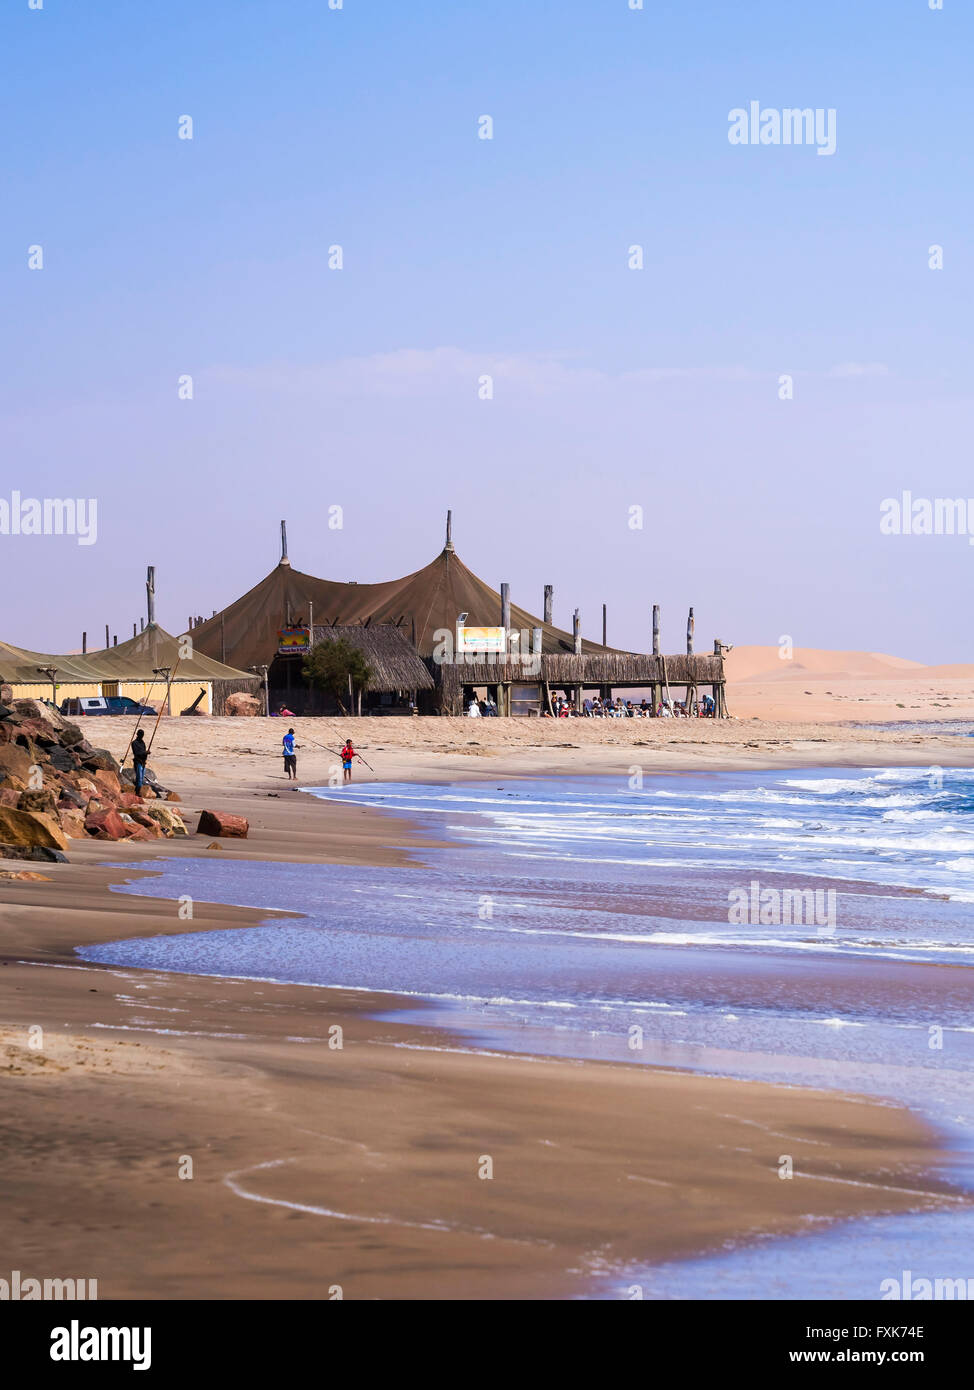 Restaurant Tiger Reef on the beach in Swakopmund, Namibia Stock Photo